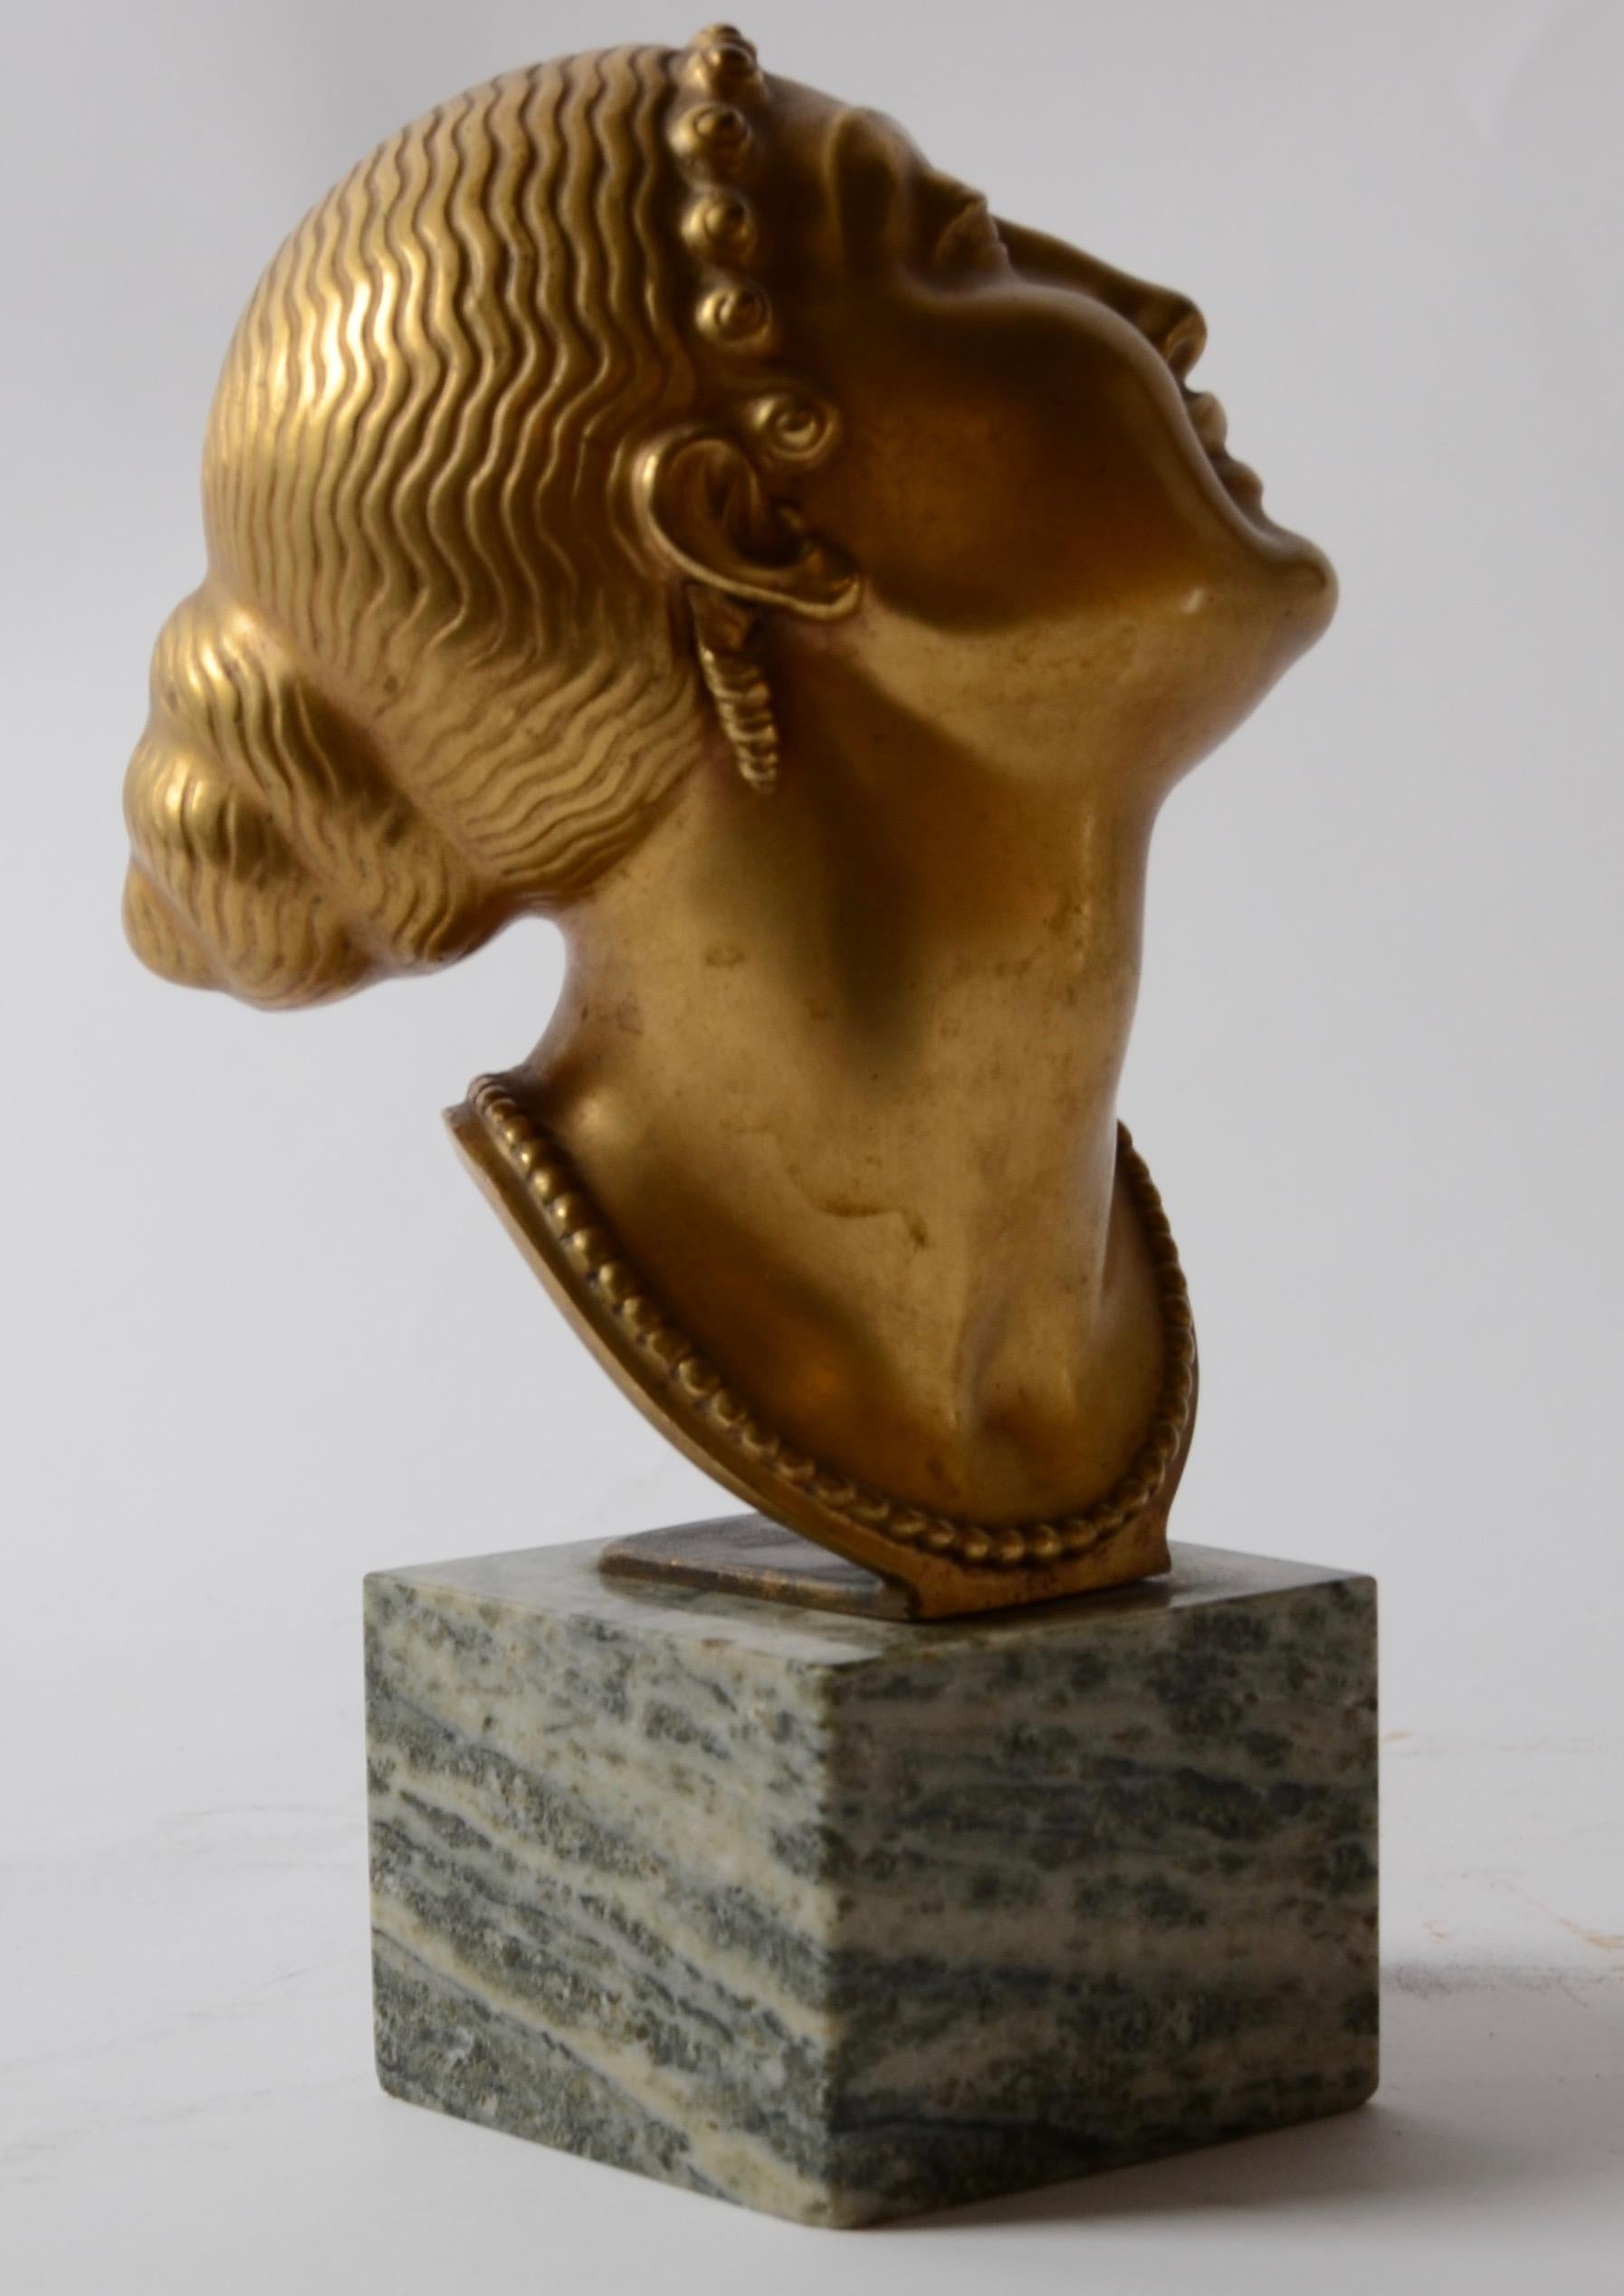 Scandinavian Modern Olof Ahlberg, Sculpture, Gilded Bronze, Herman Bergman, 1920